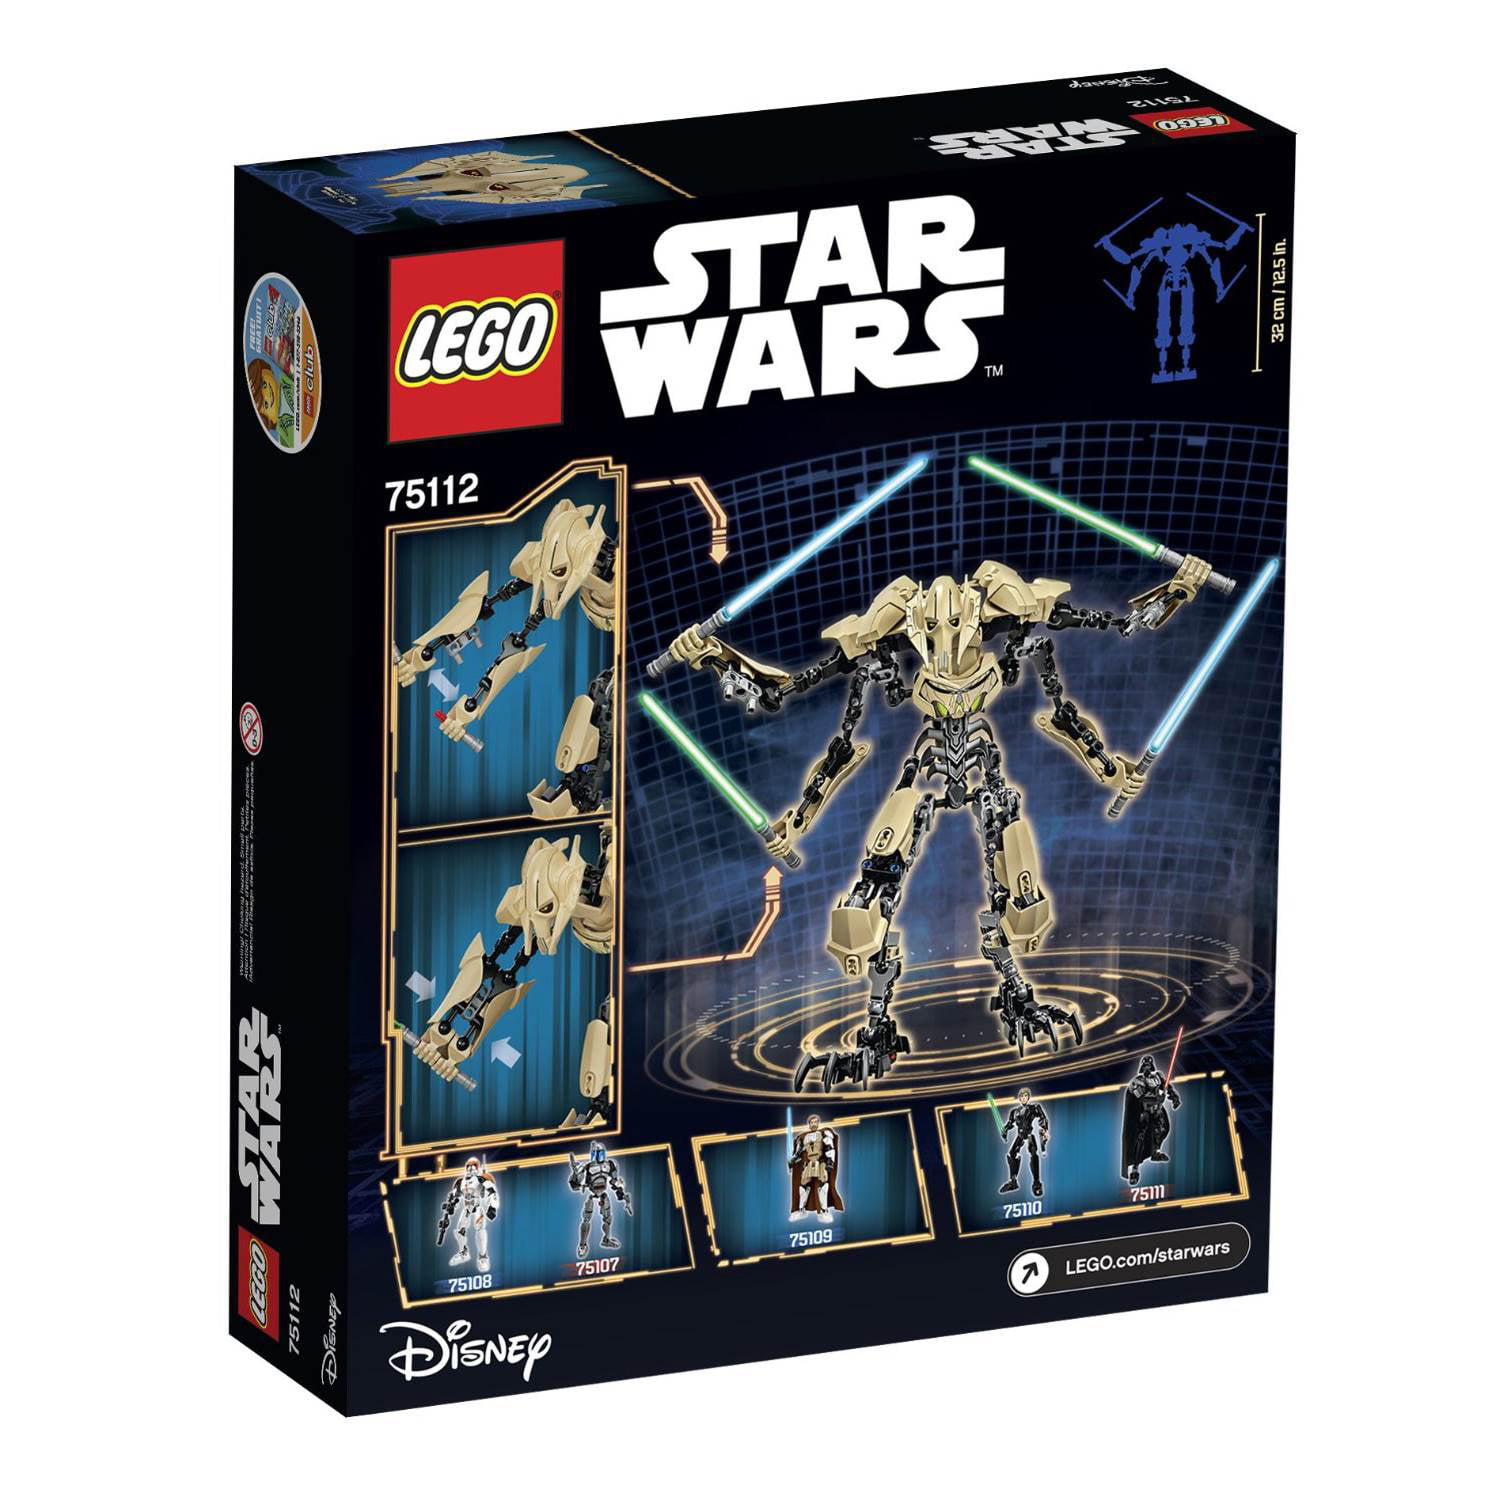 Lego Star Wars General Grievous Buildable Figure Game 75112 Building Block Brick 